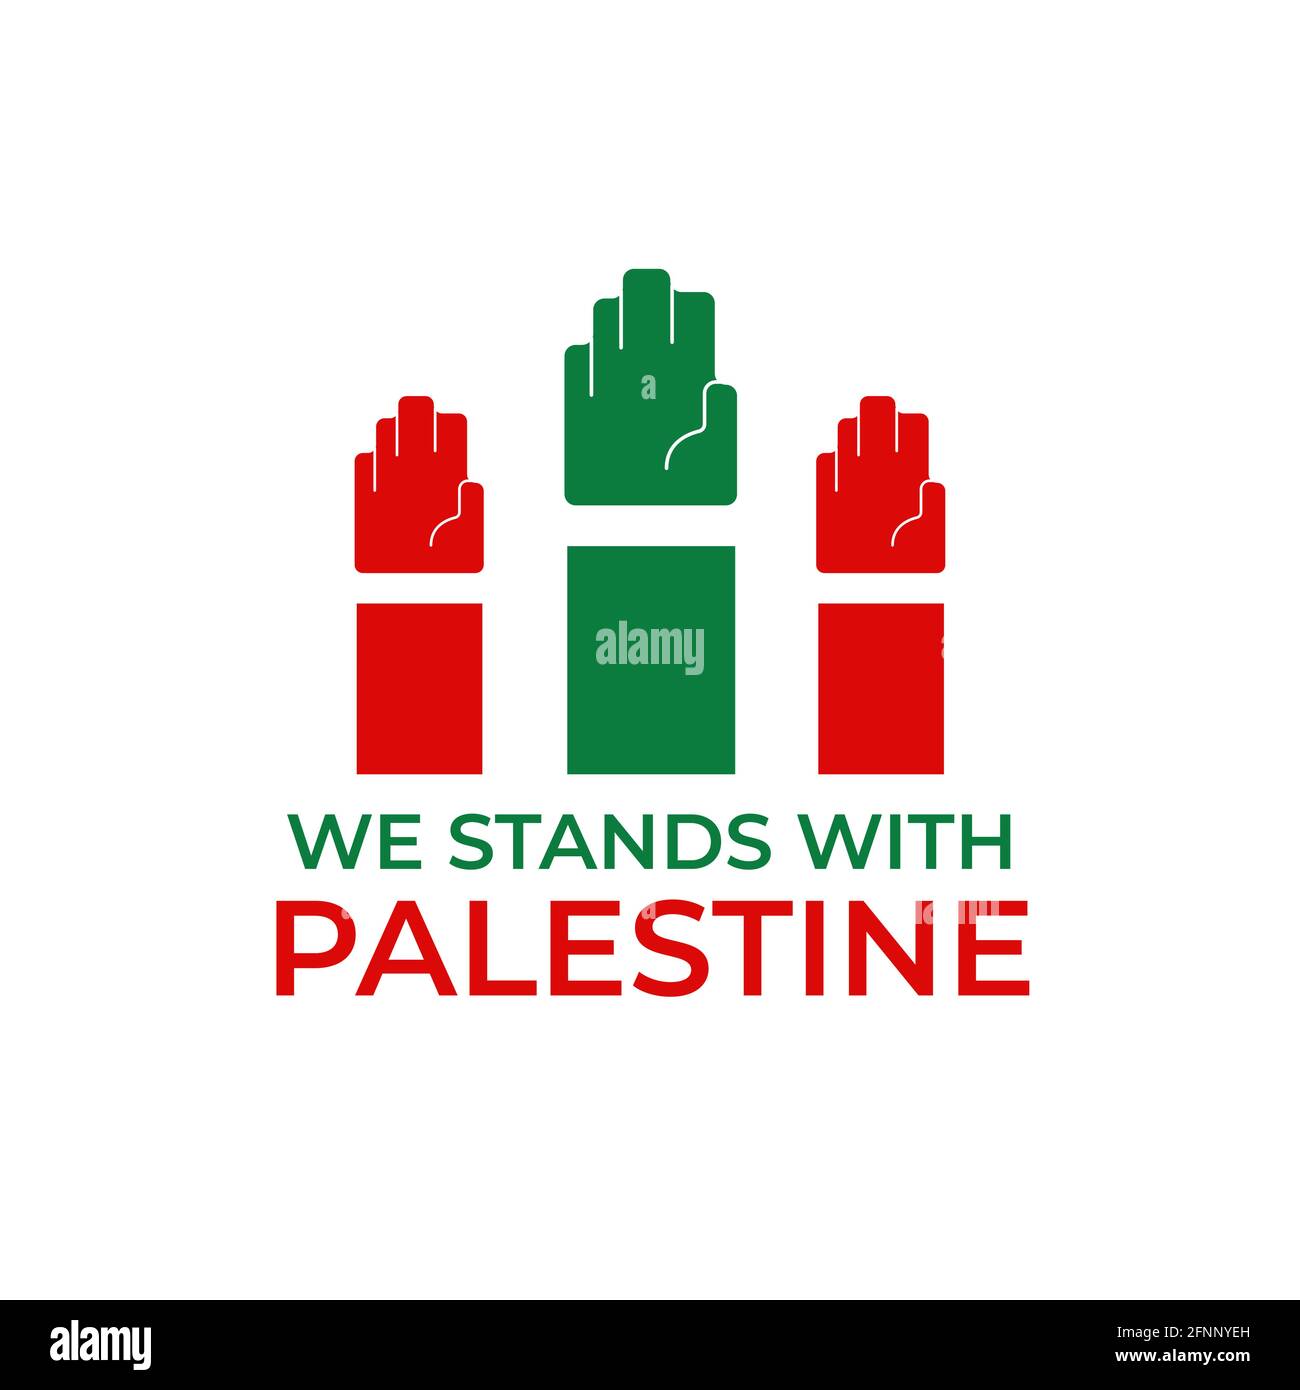 Save palestine poster